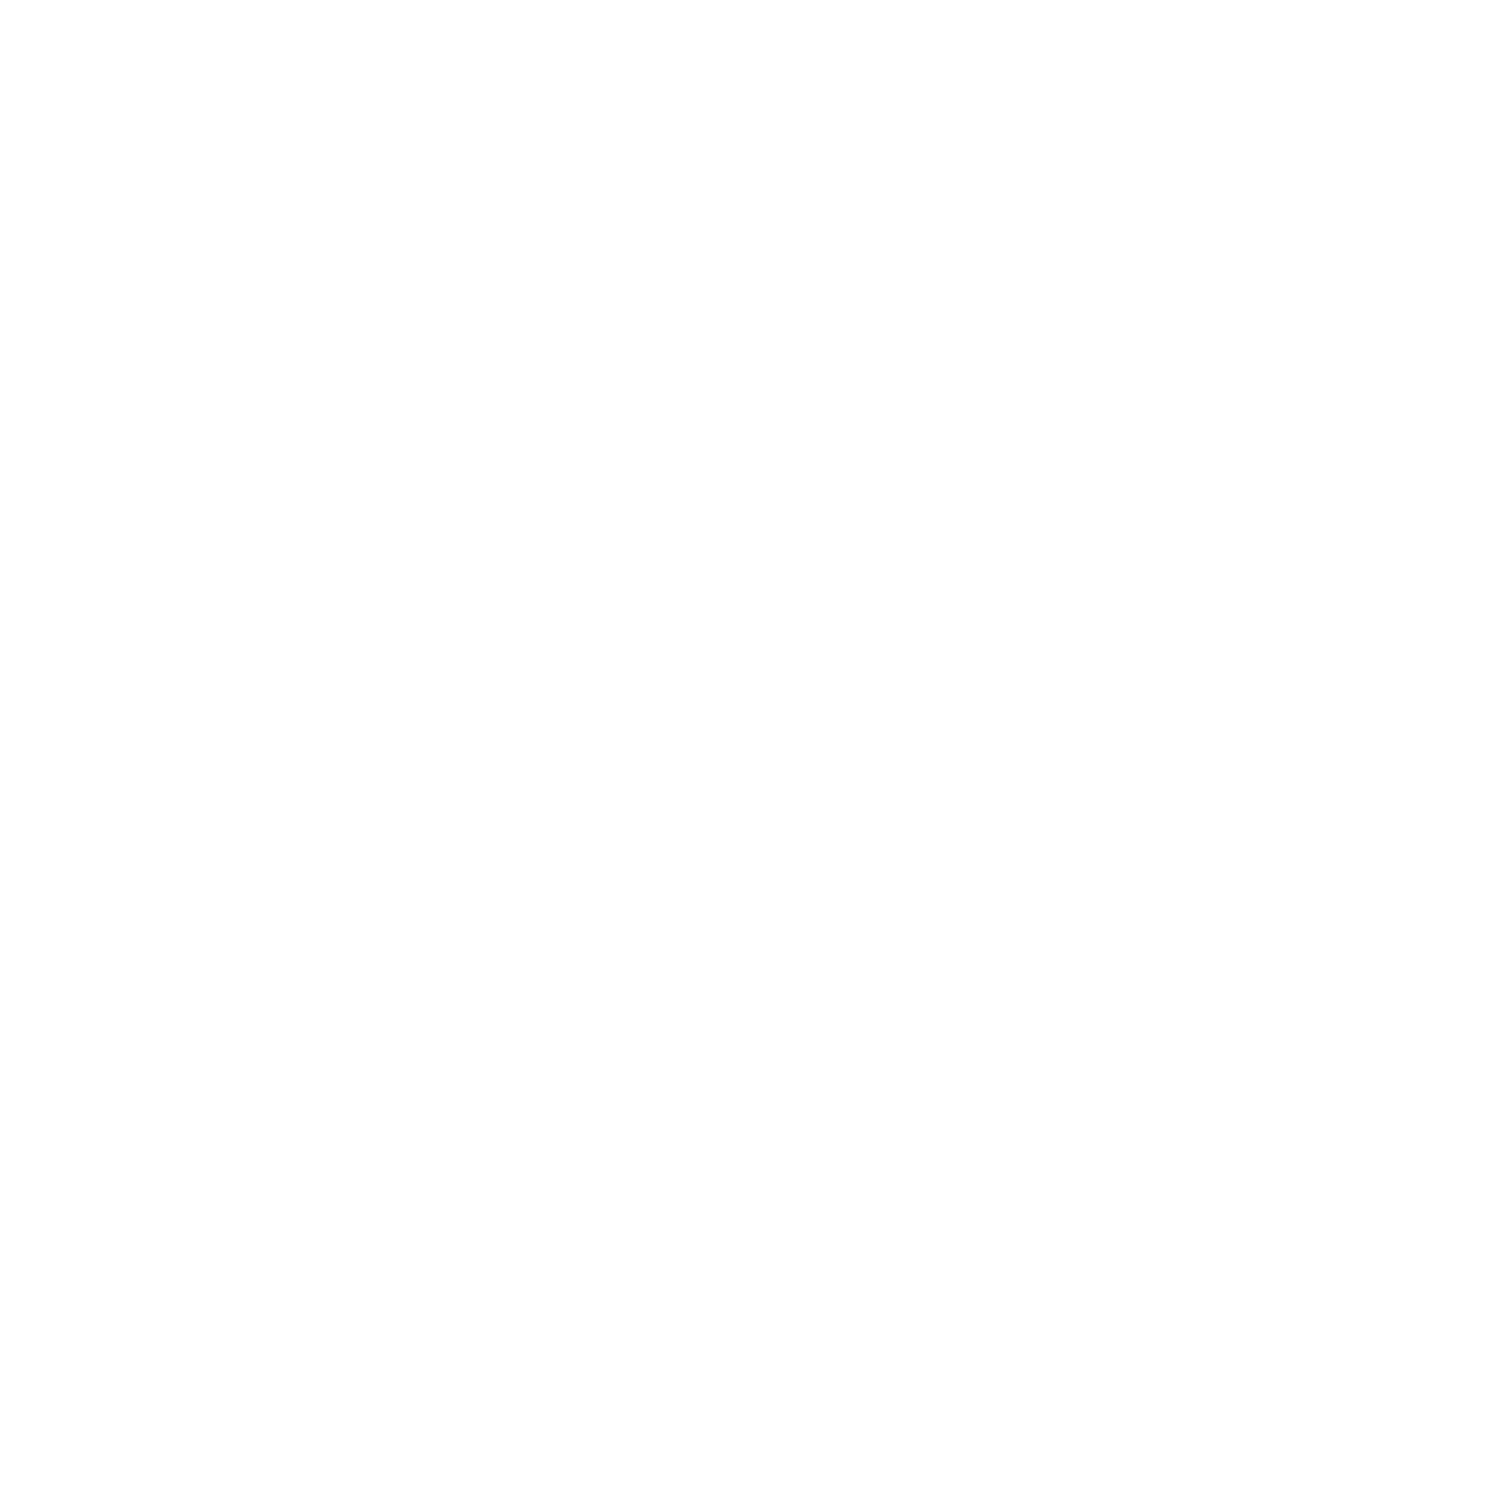 The New Cumberland